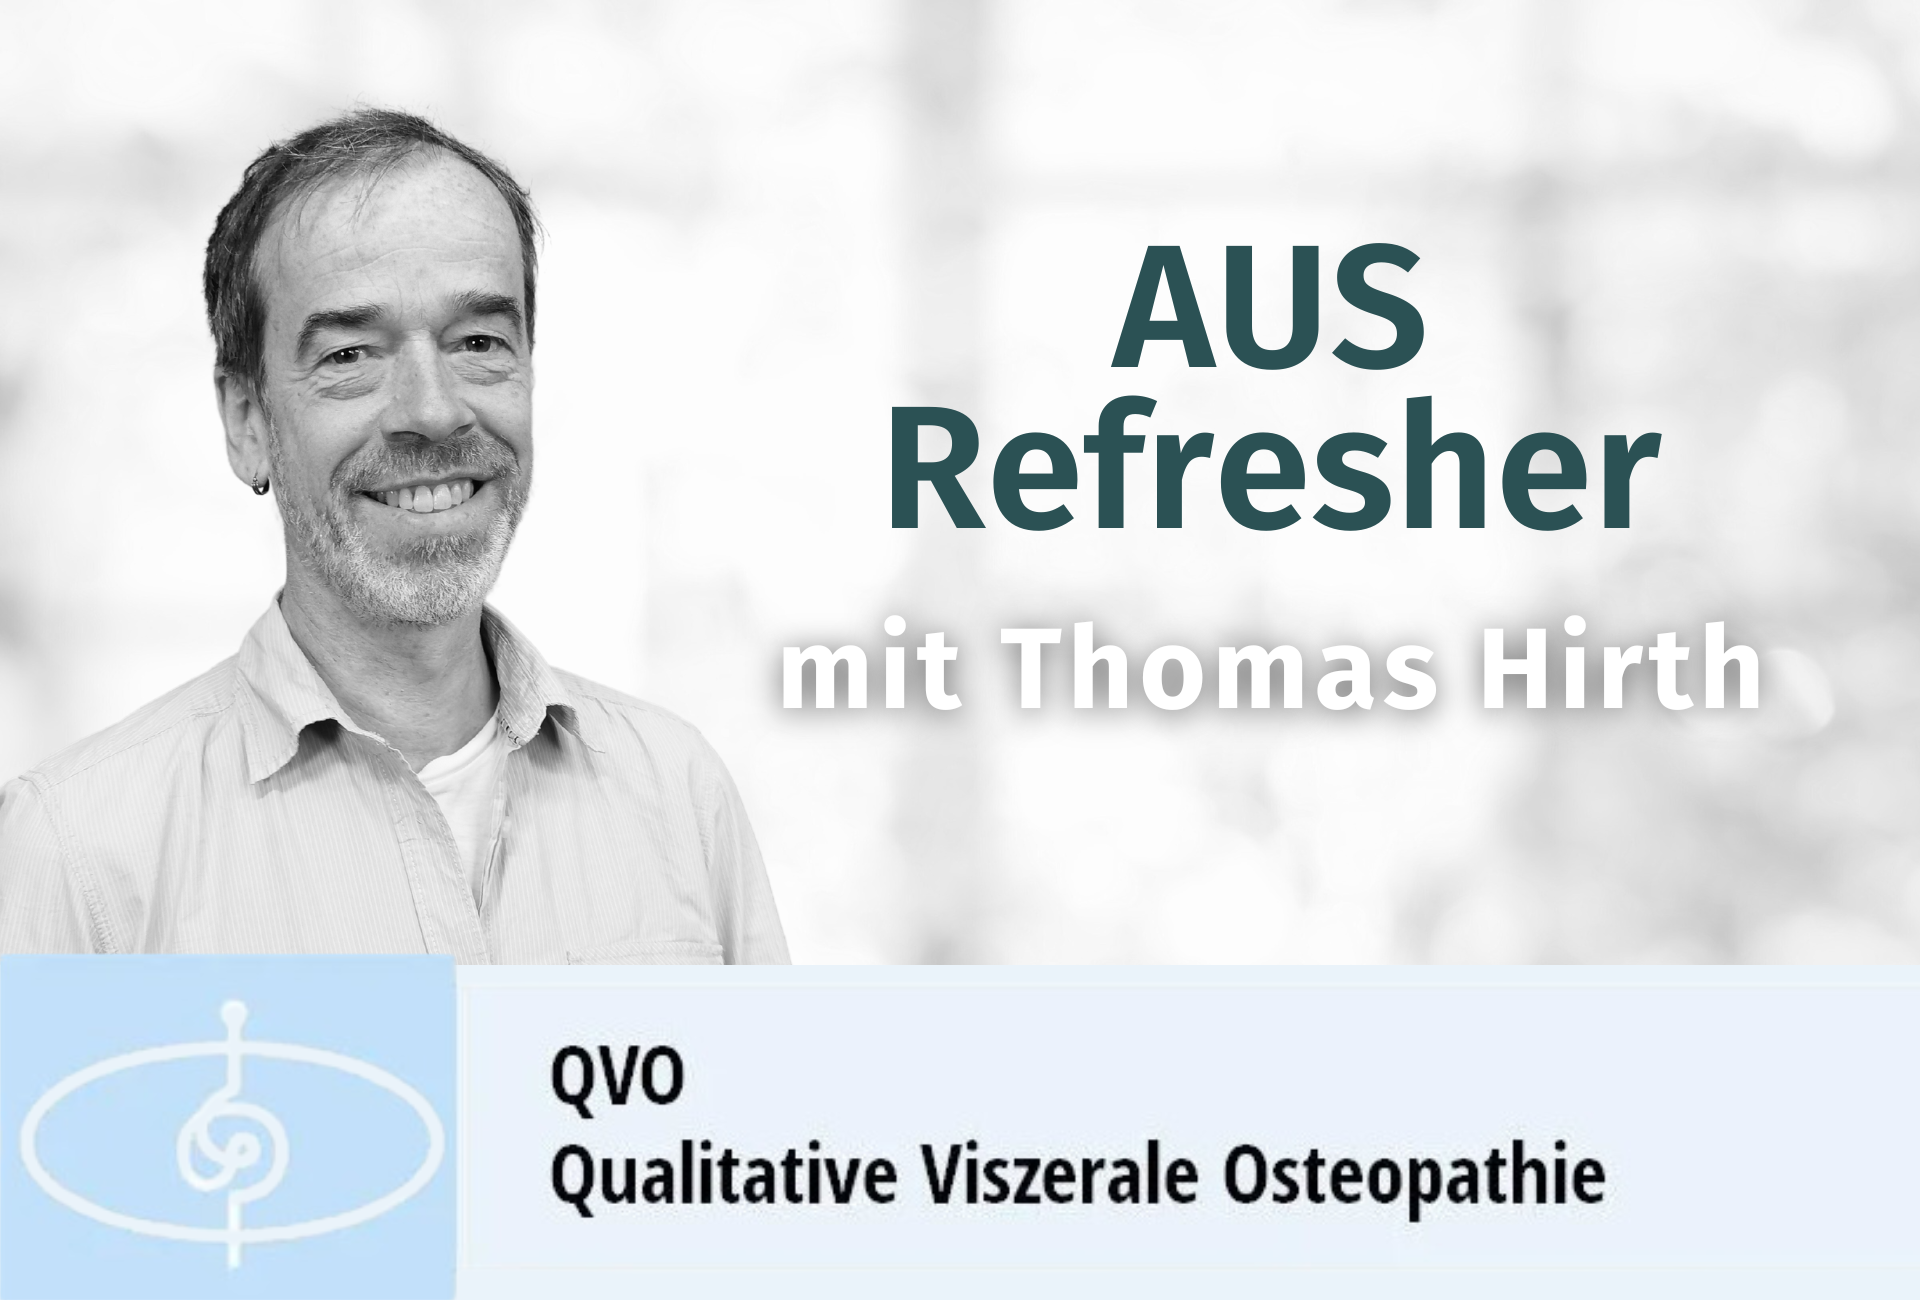 Qualitative Viszerale Osteopathie: Refresher AUS